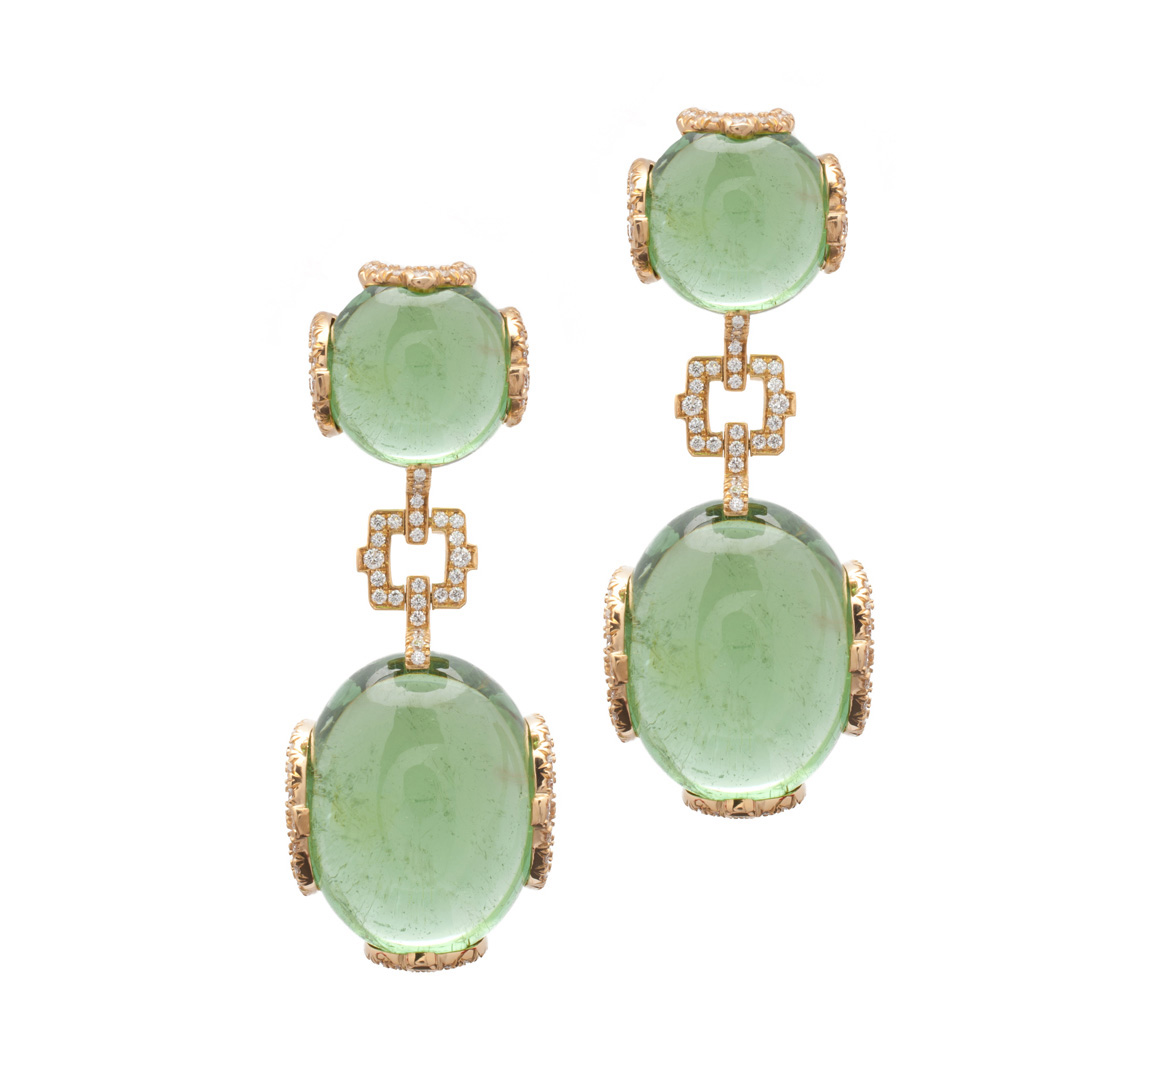 Goshwara "G-One" Green Tourmaline & Diamond Drop Earrings in 18kt Yellow Gold